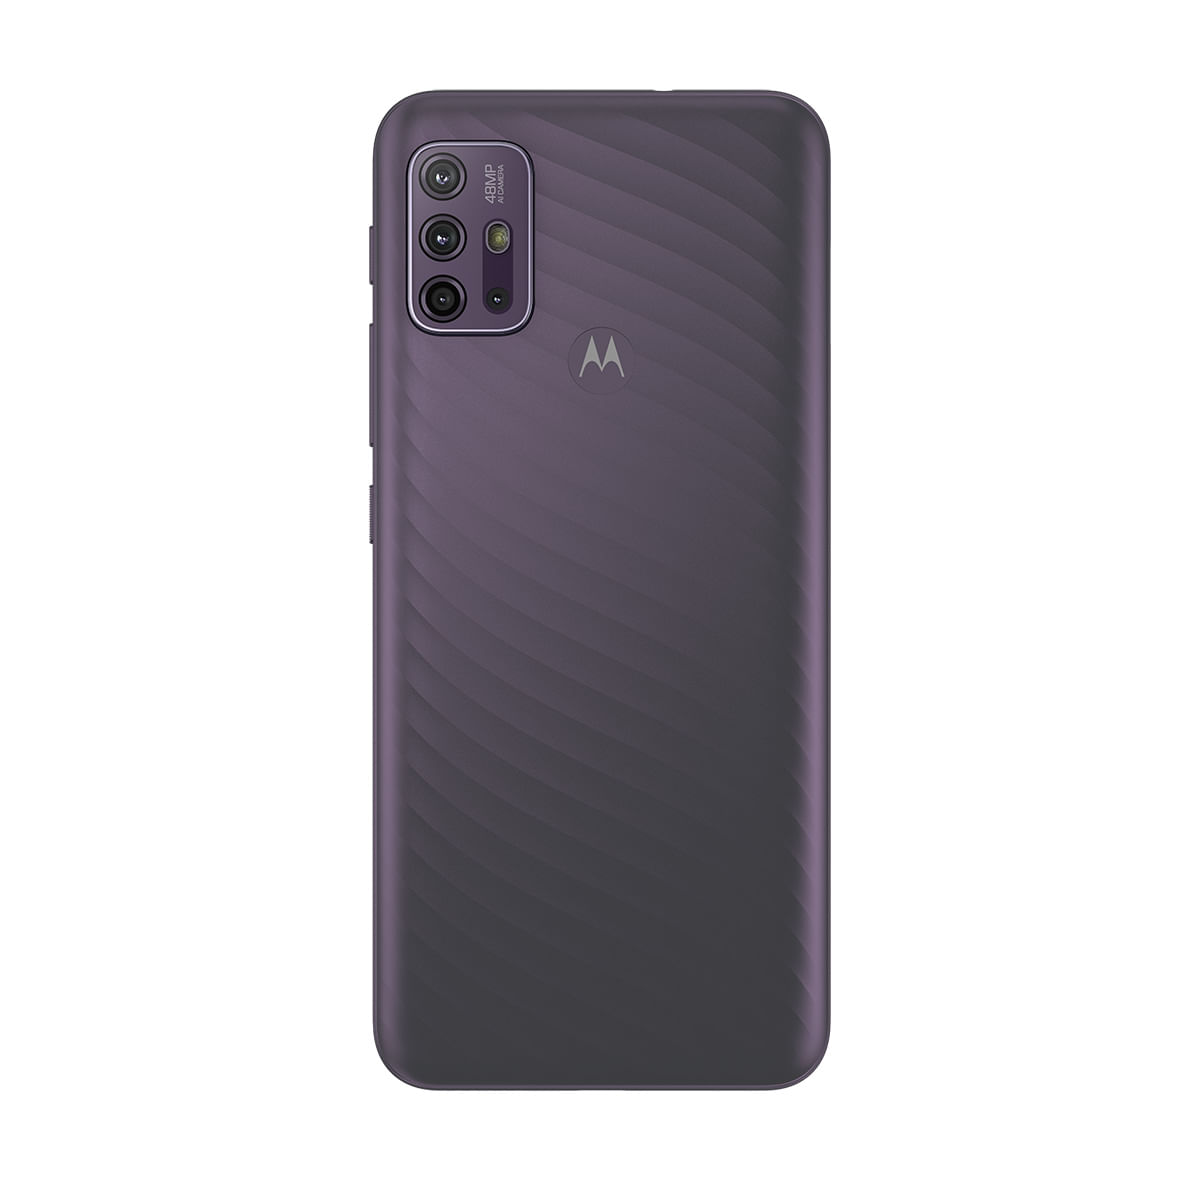 Smartphone Motorola Moto G10 64GB 4G Cinza Aurora 6,5” 48MP Traseira